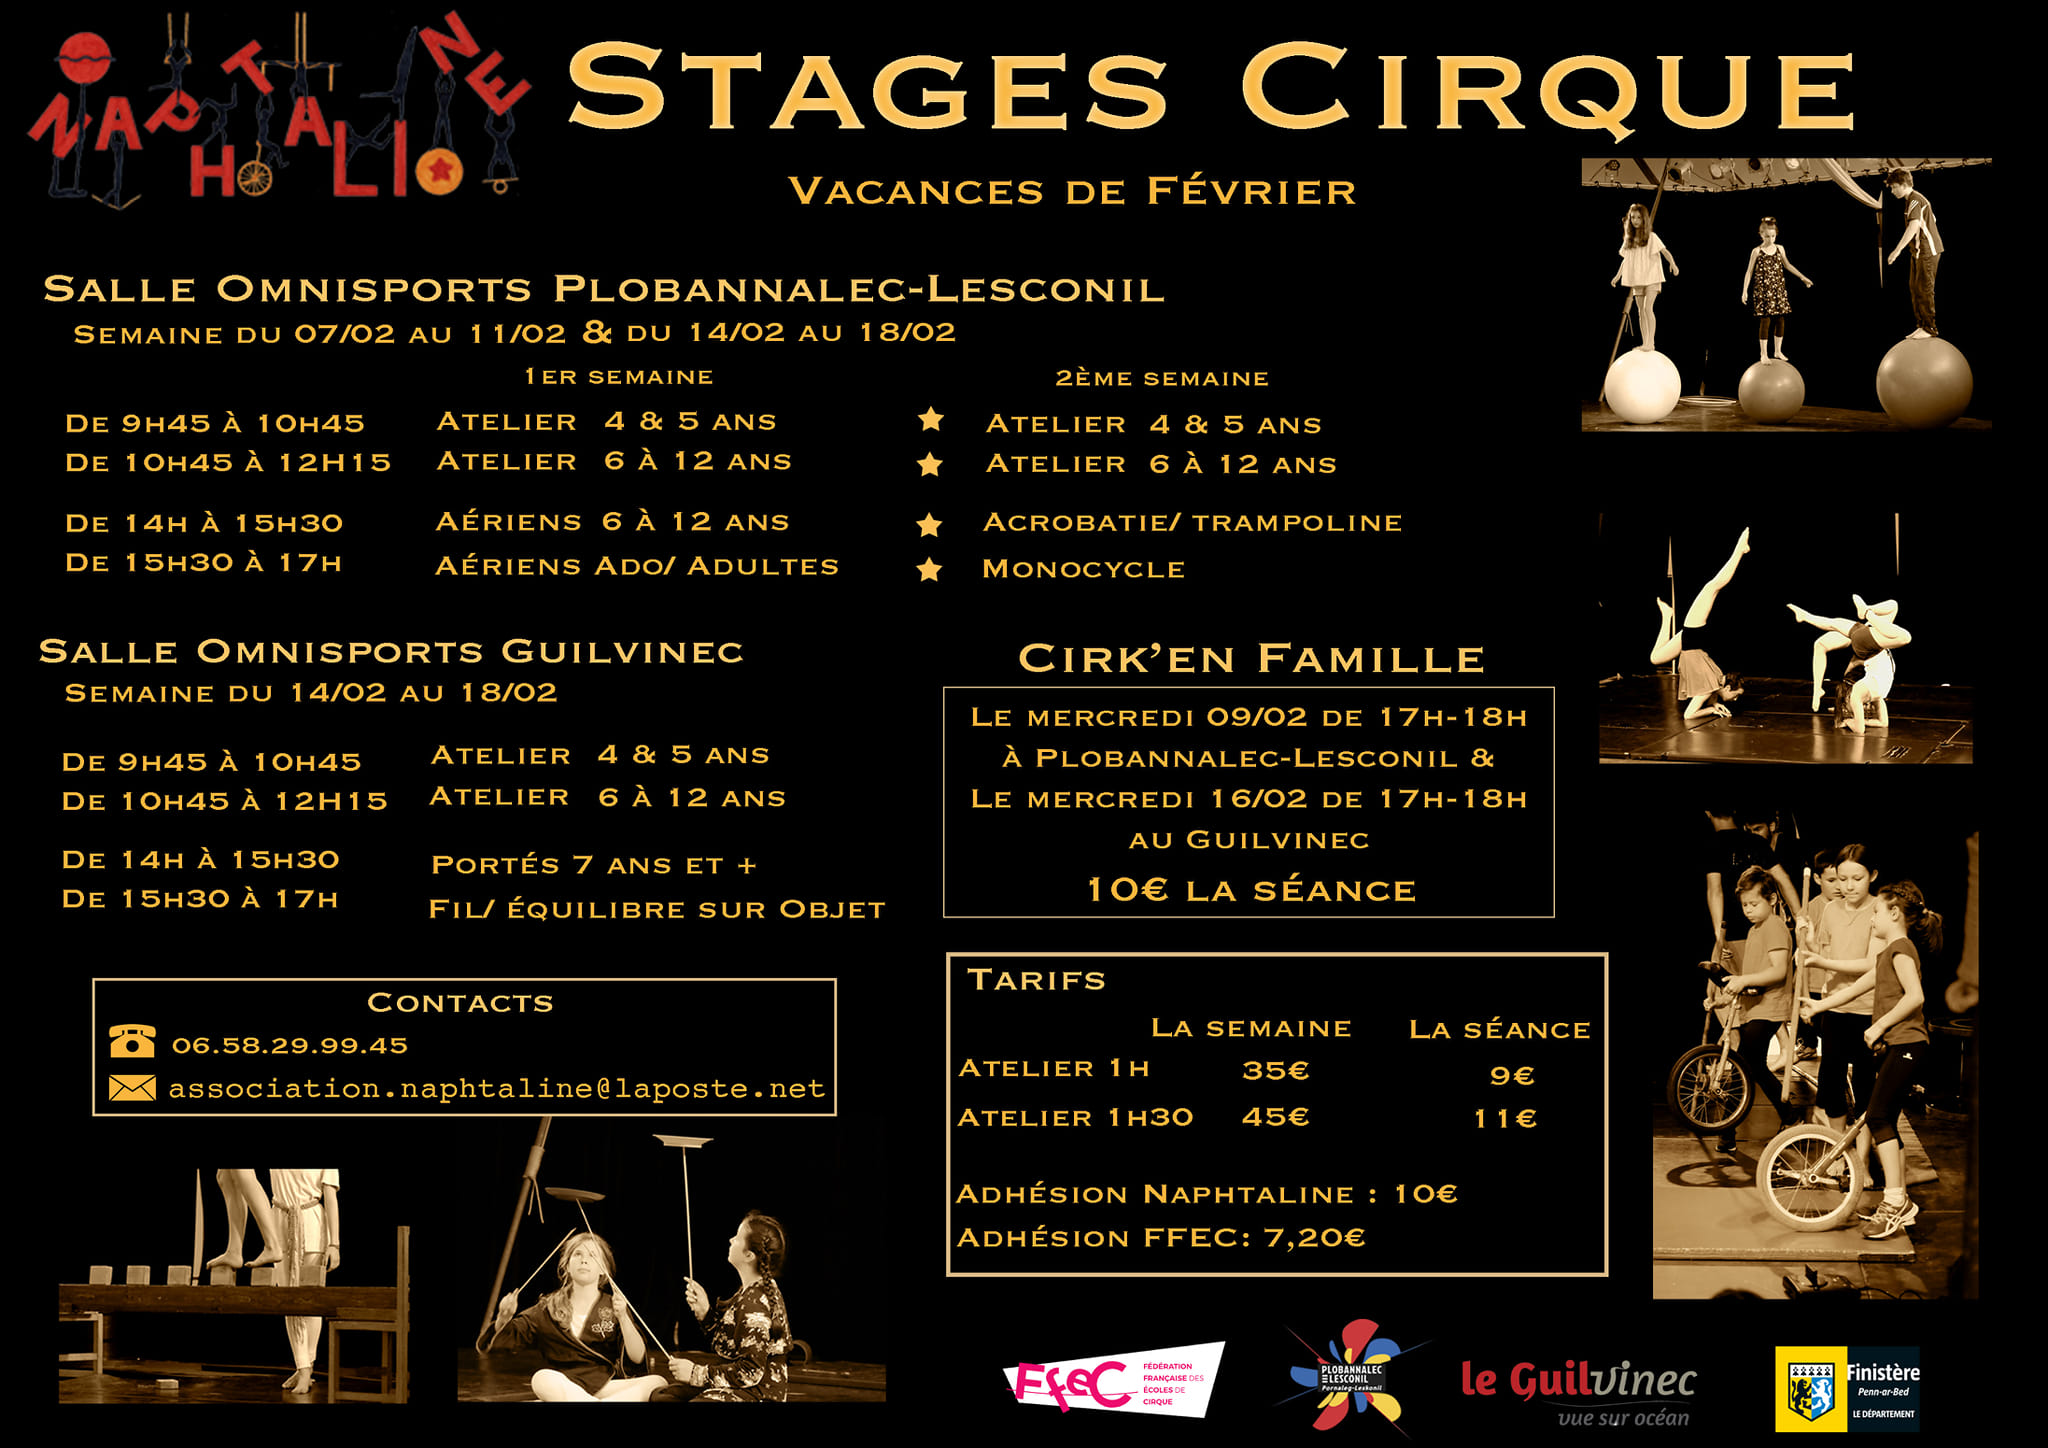 Stages de cirque